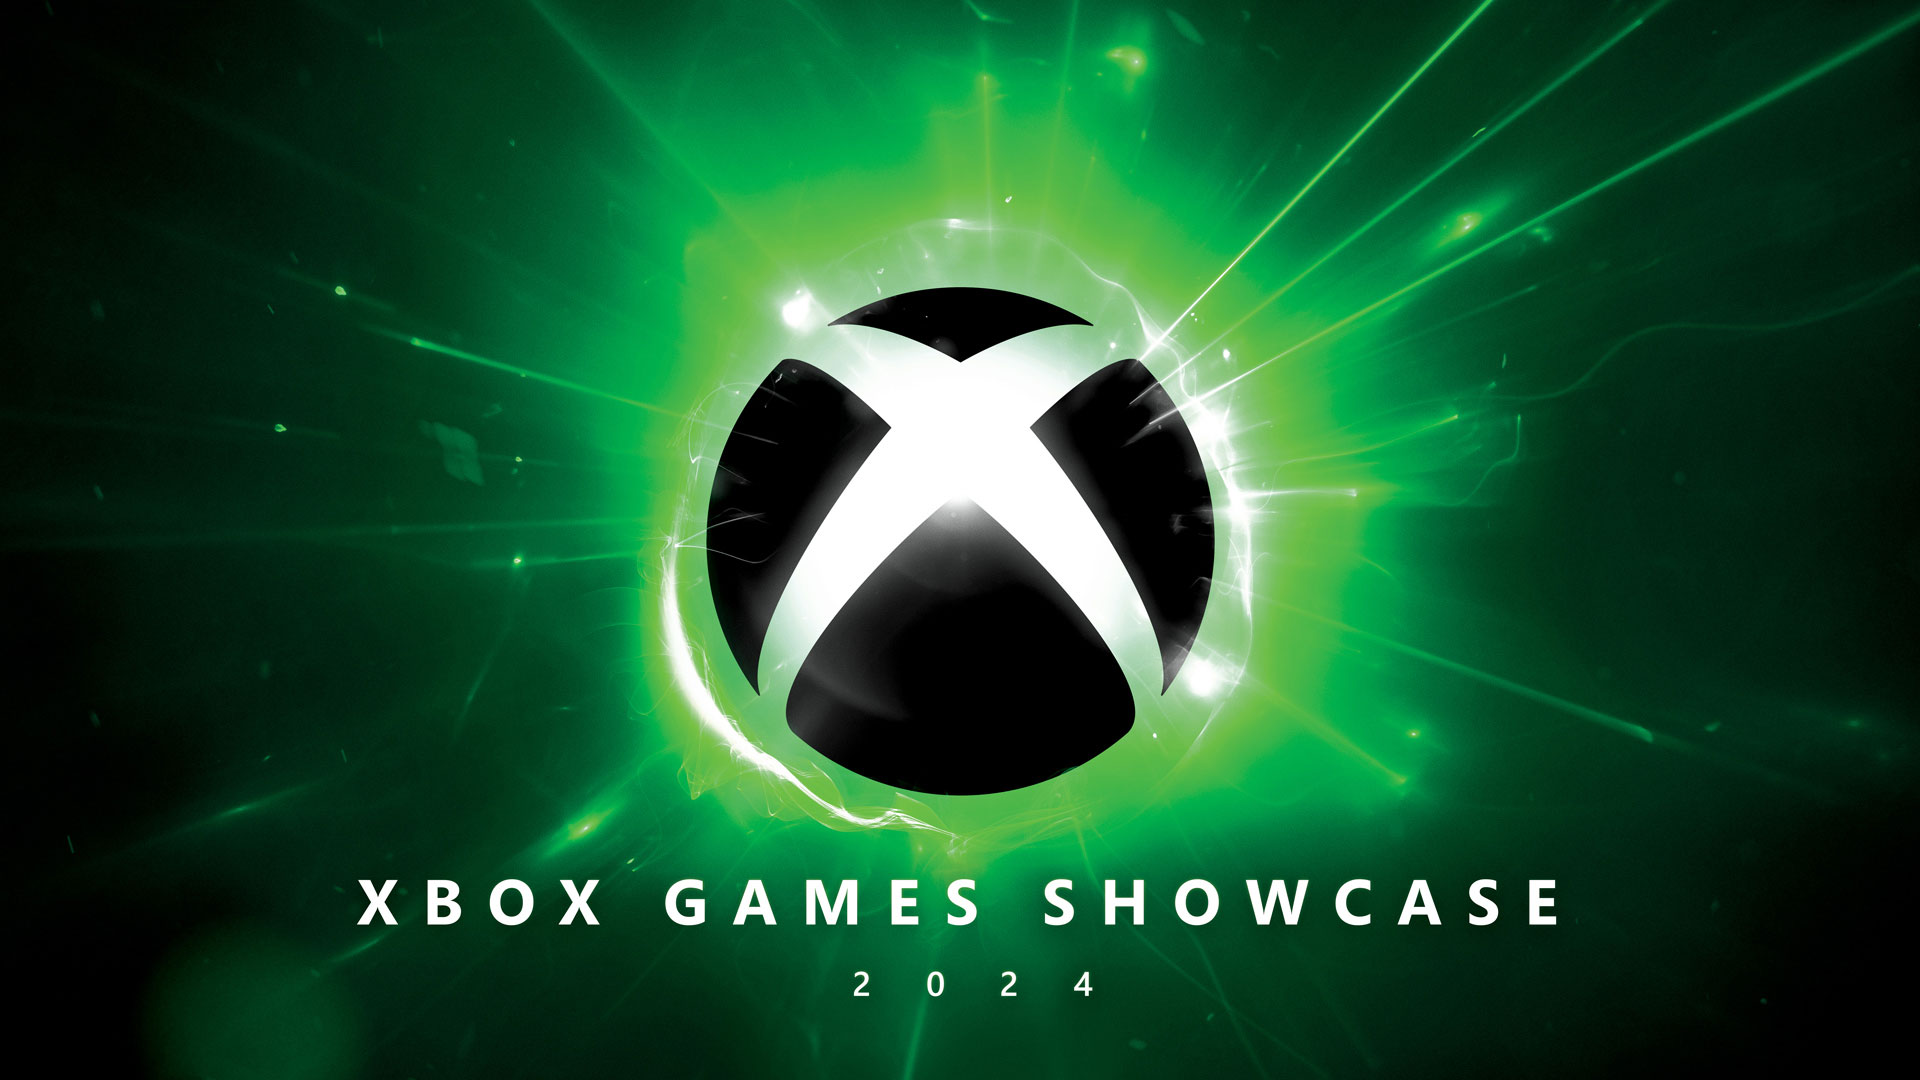 Xbox had plenty to announce during Xbox Games Showcase 2024